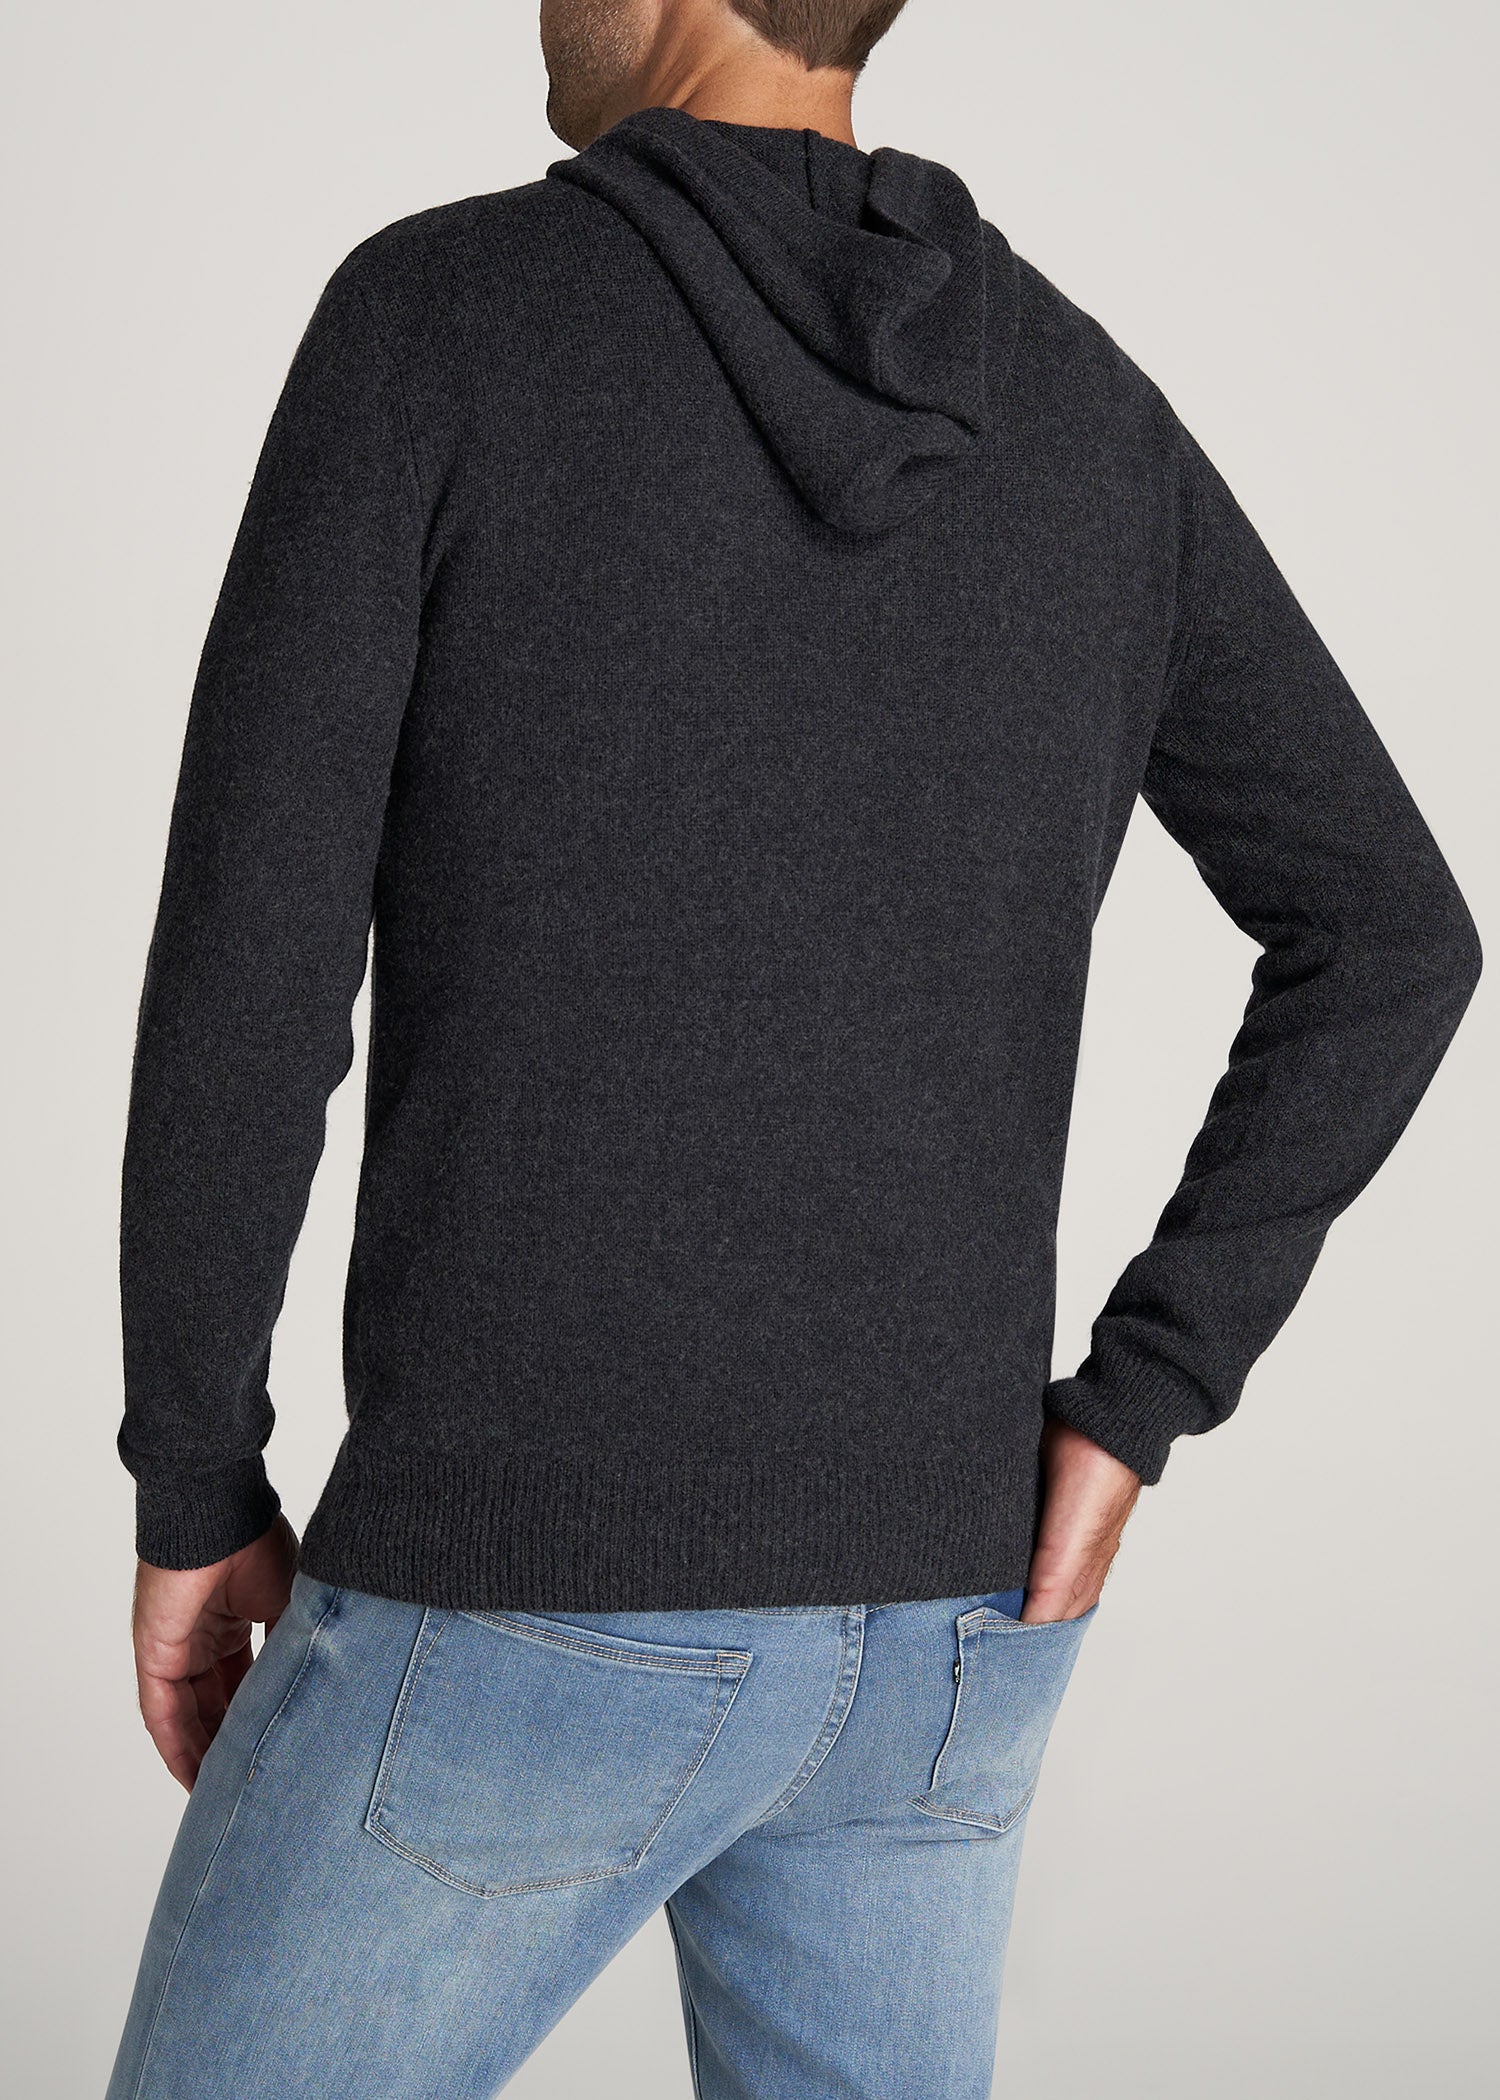 Visser Omgekeerd Proportioneel Hooded Merino Wool Tall Men's Sweater | American Tall